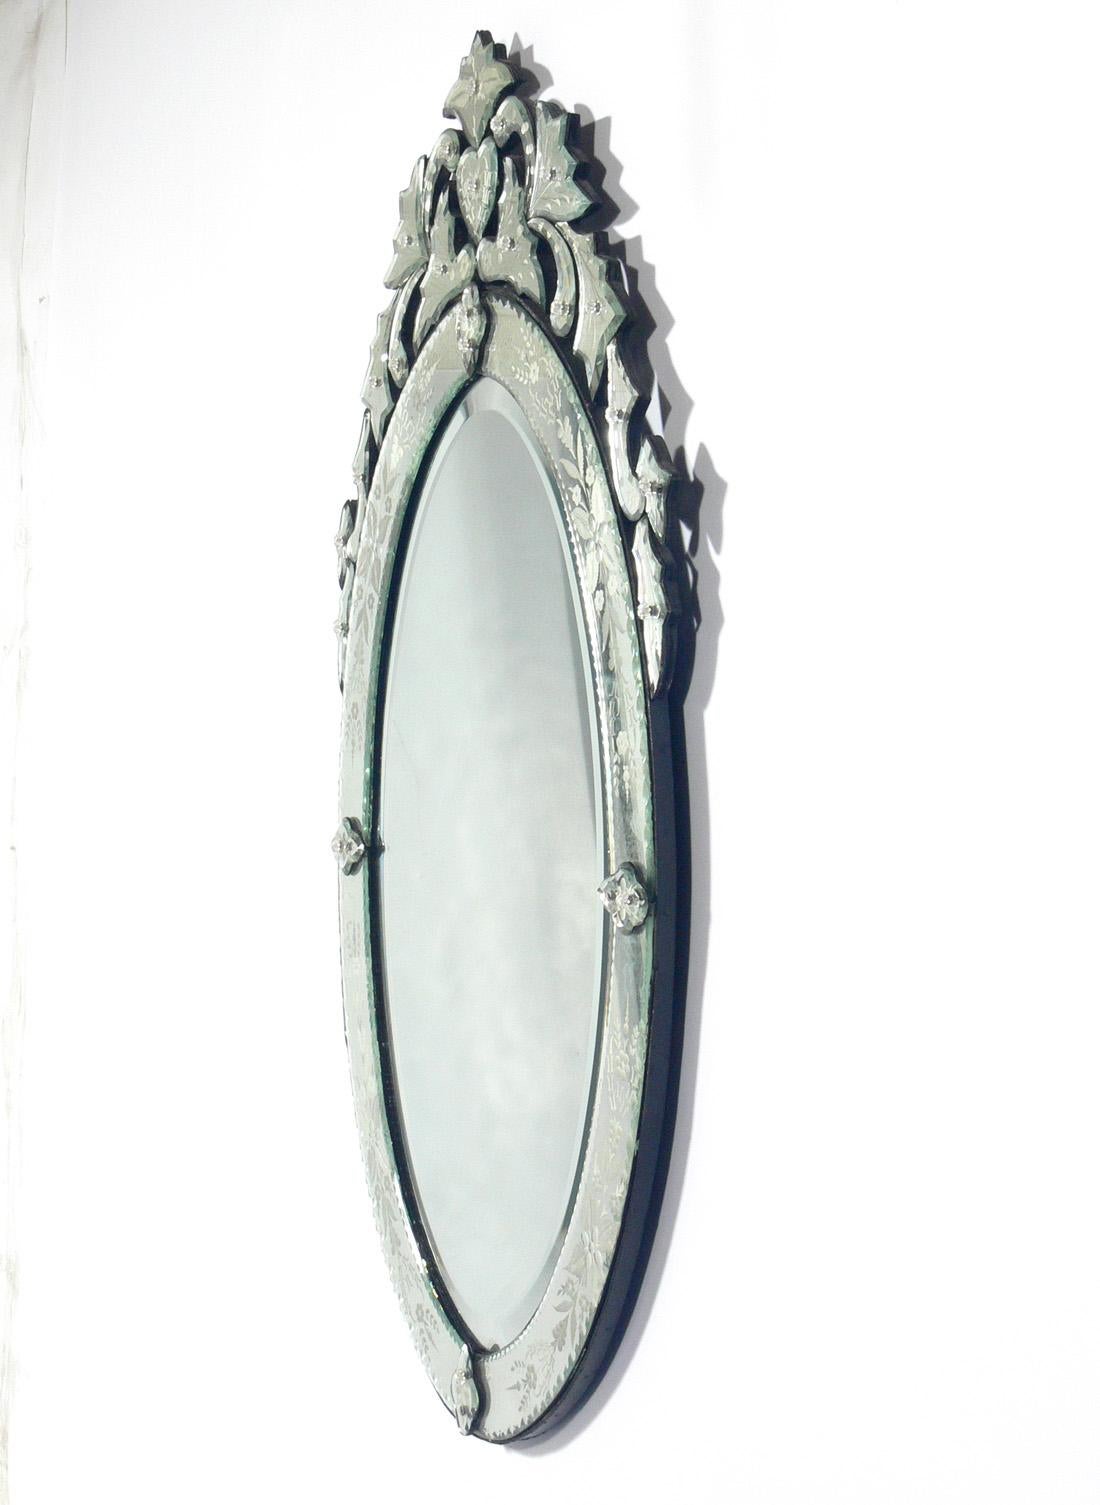 Oval Venetian mirror, Italy, circa 1950s. Retains warm original patina to original mirrored glass.